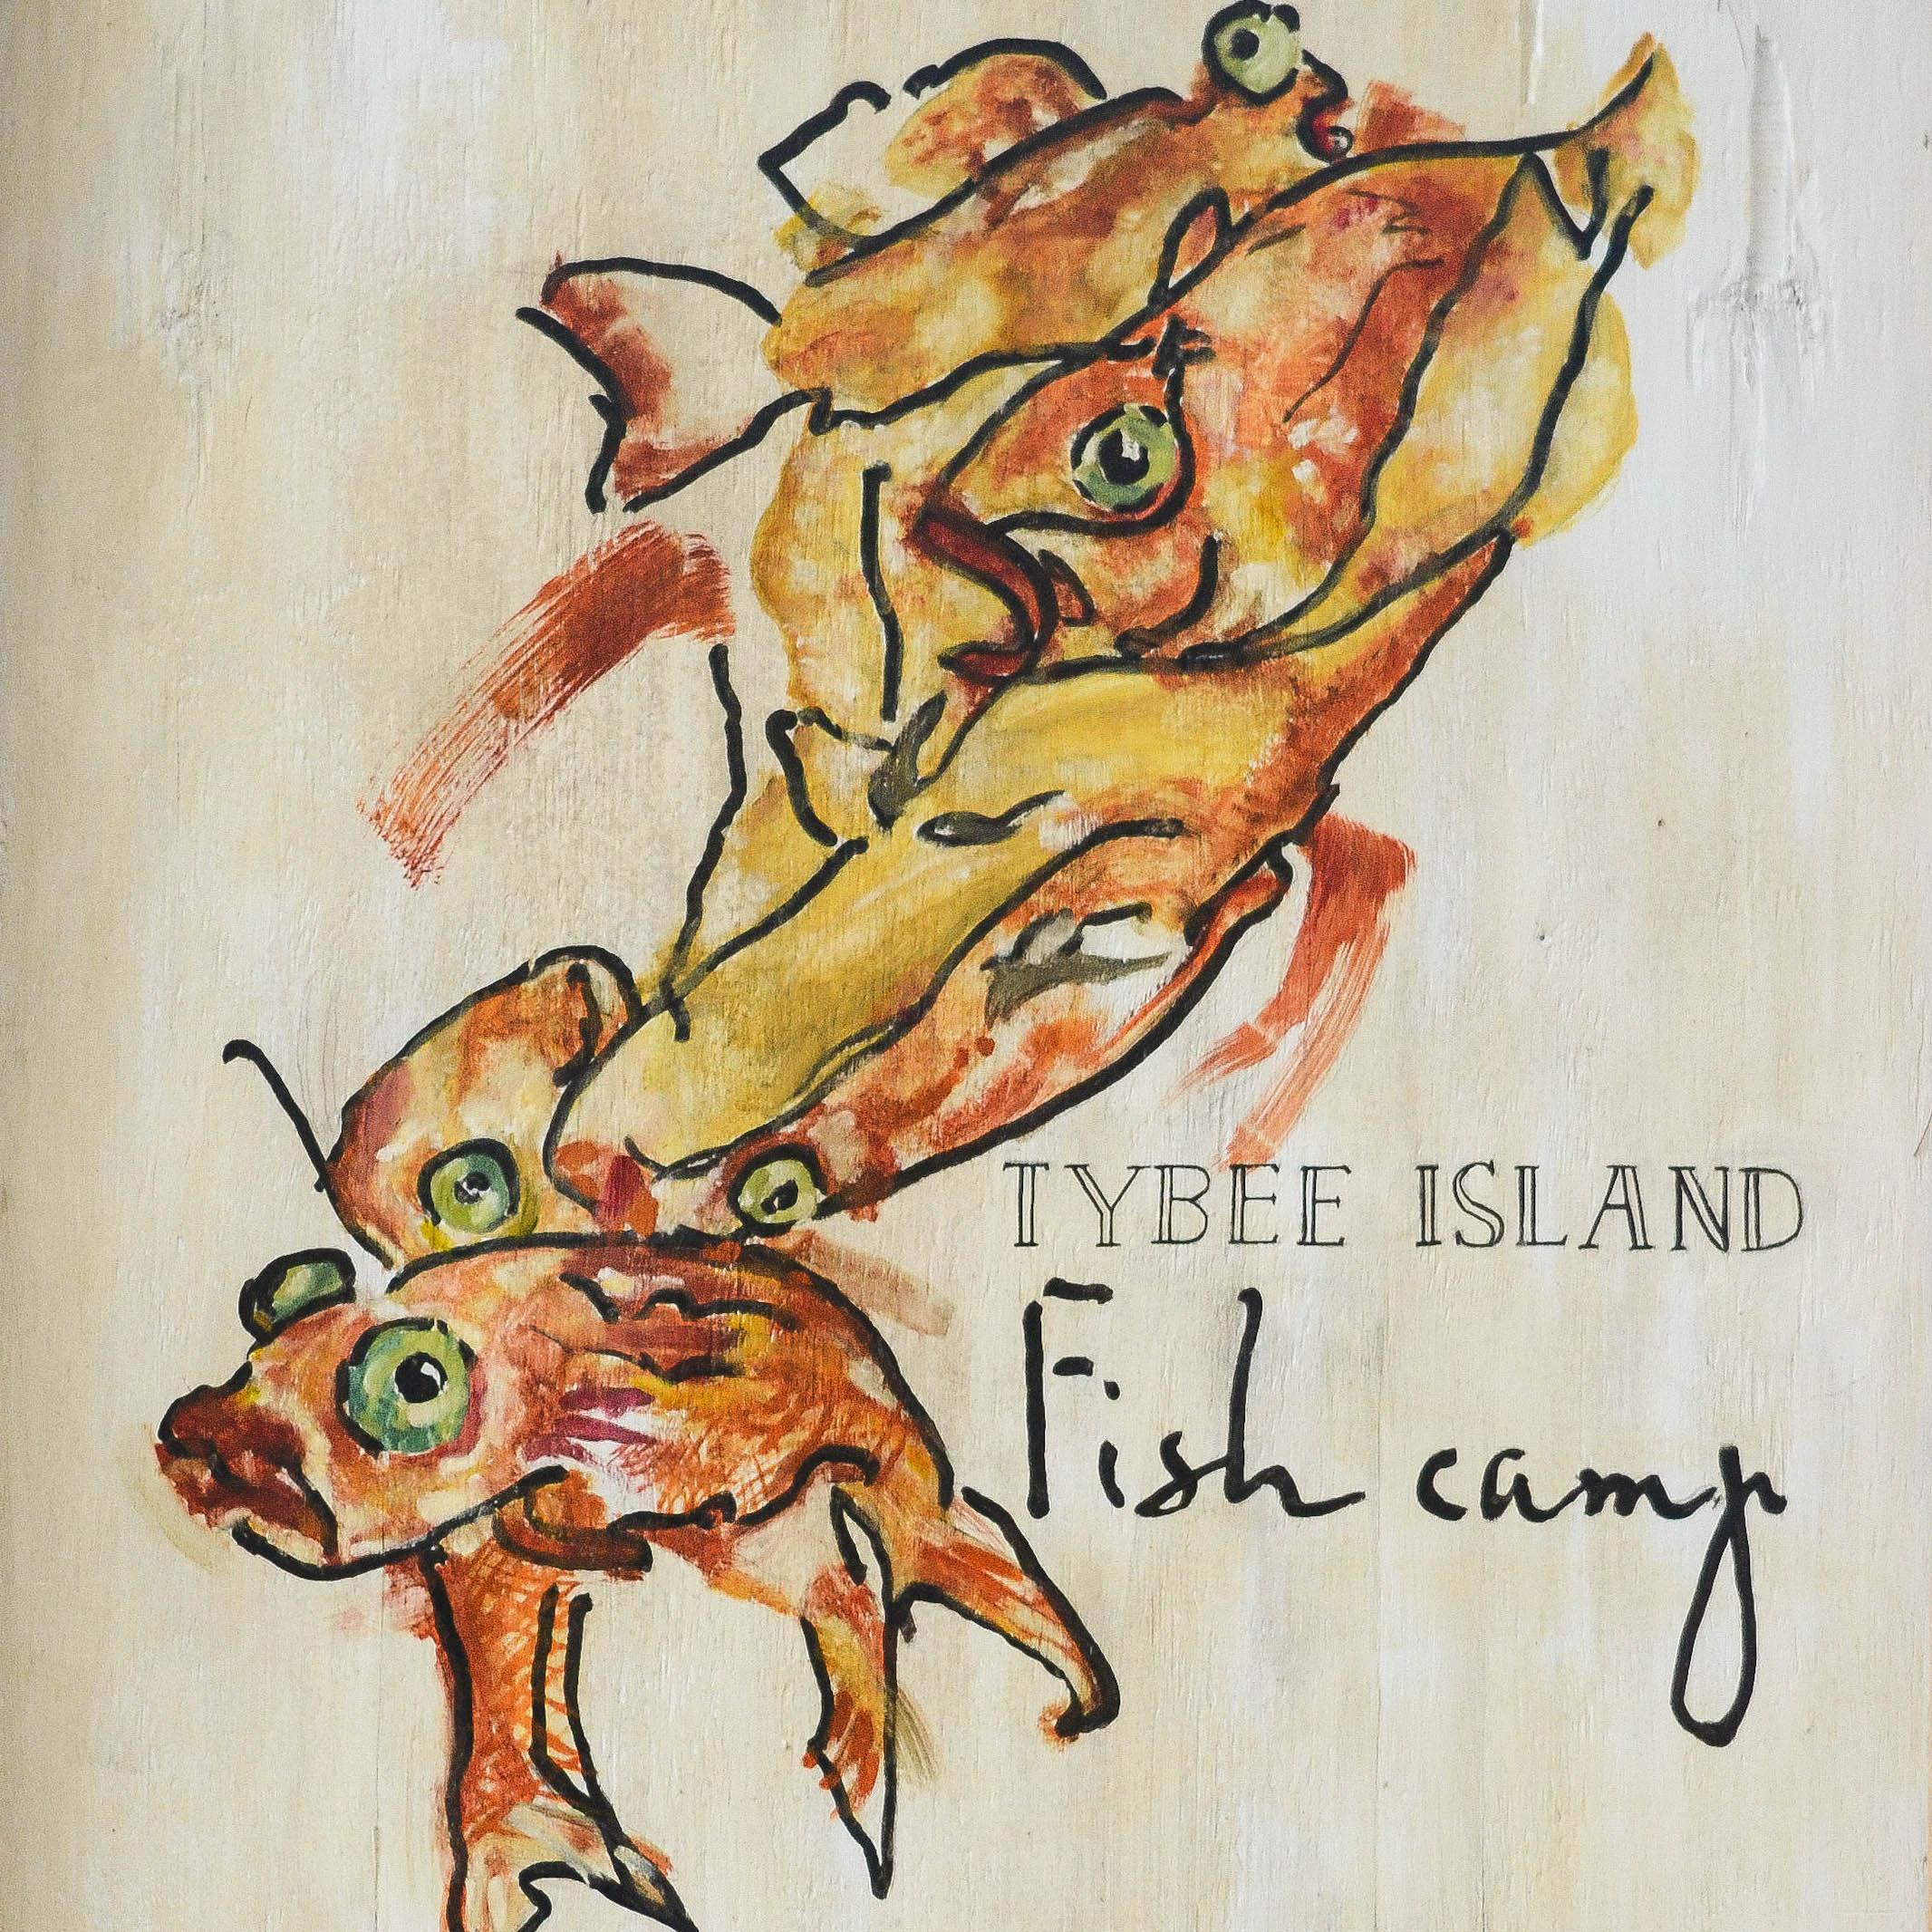 Tybee Island Fish Camp